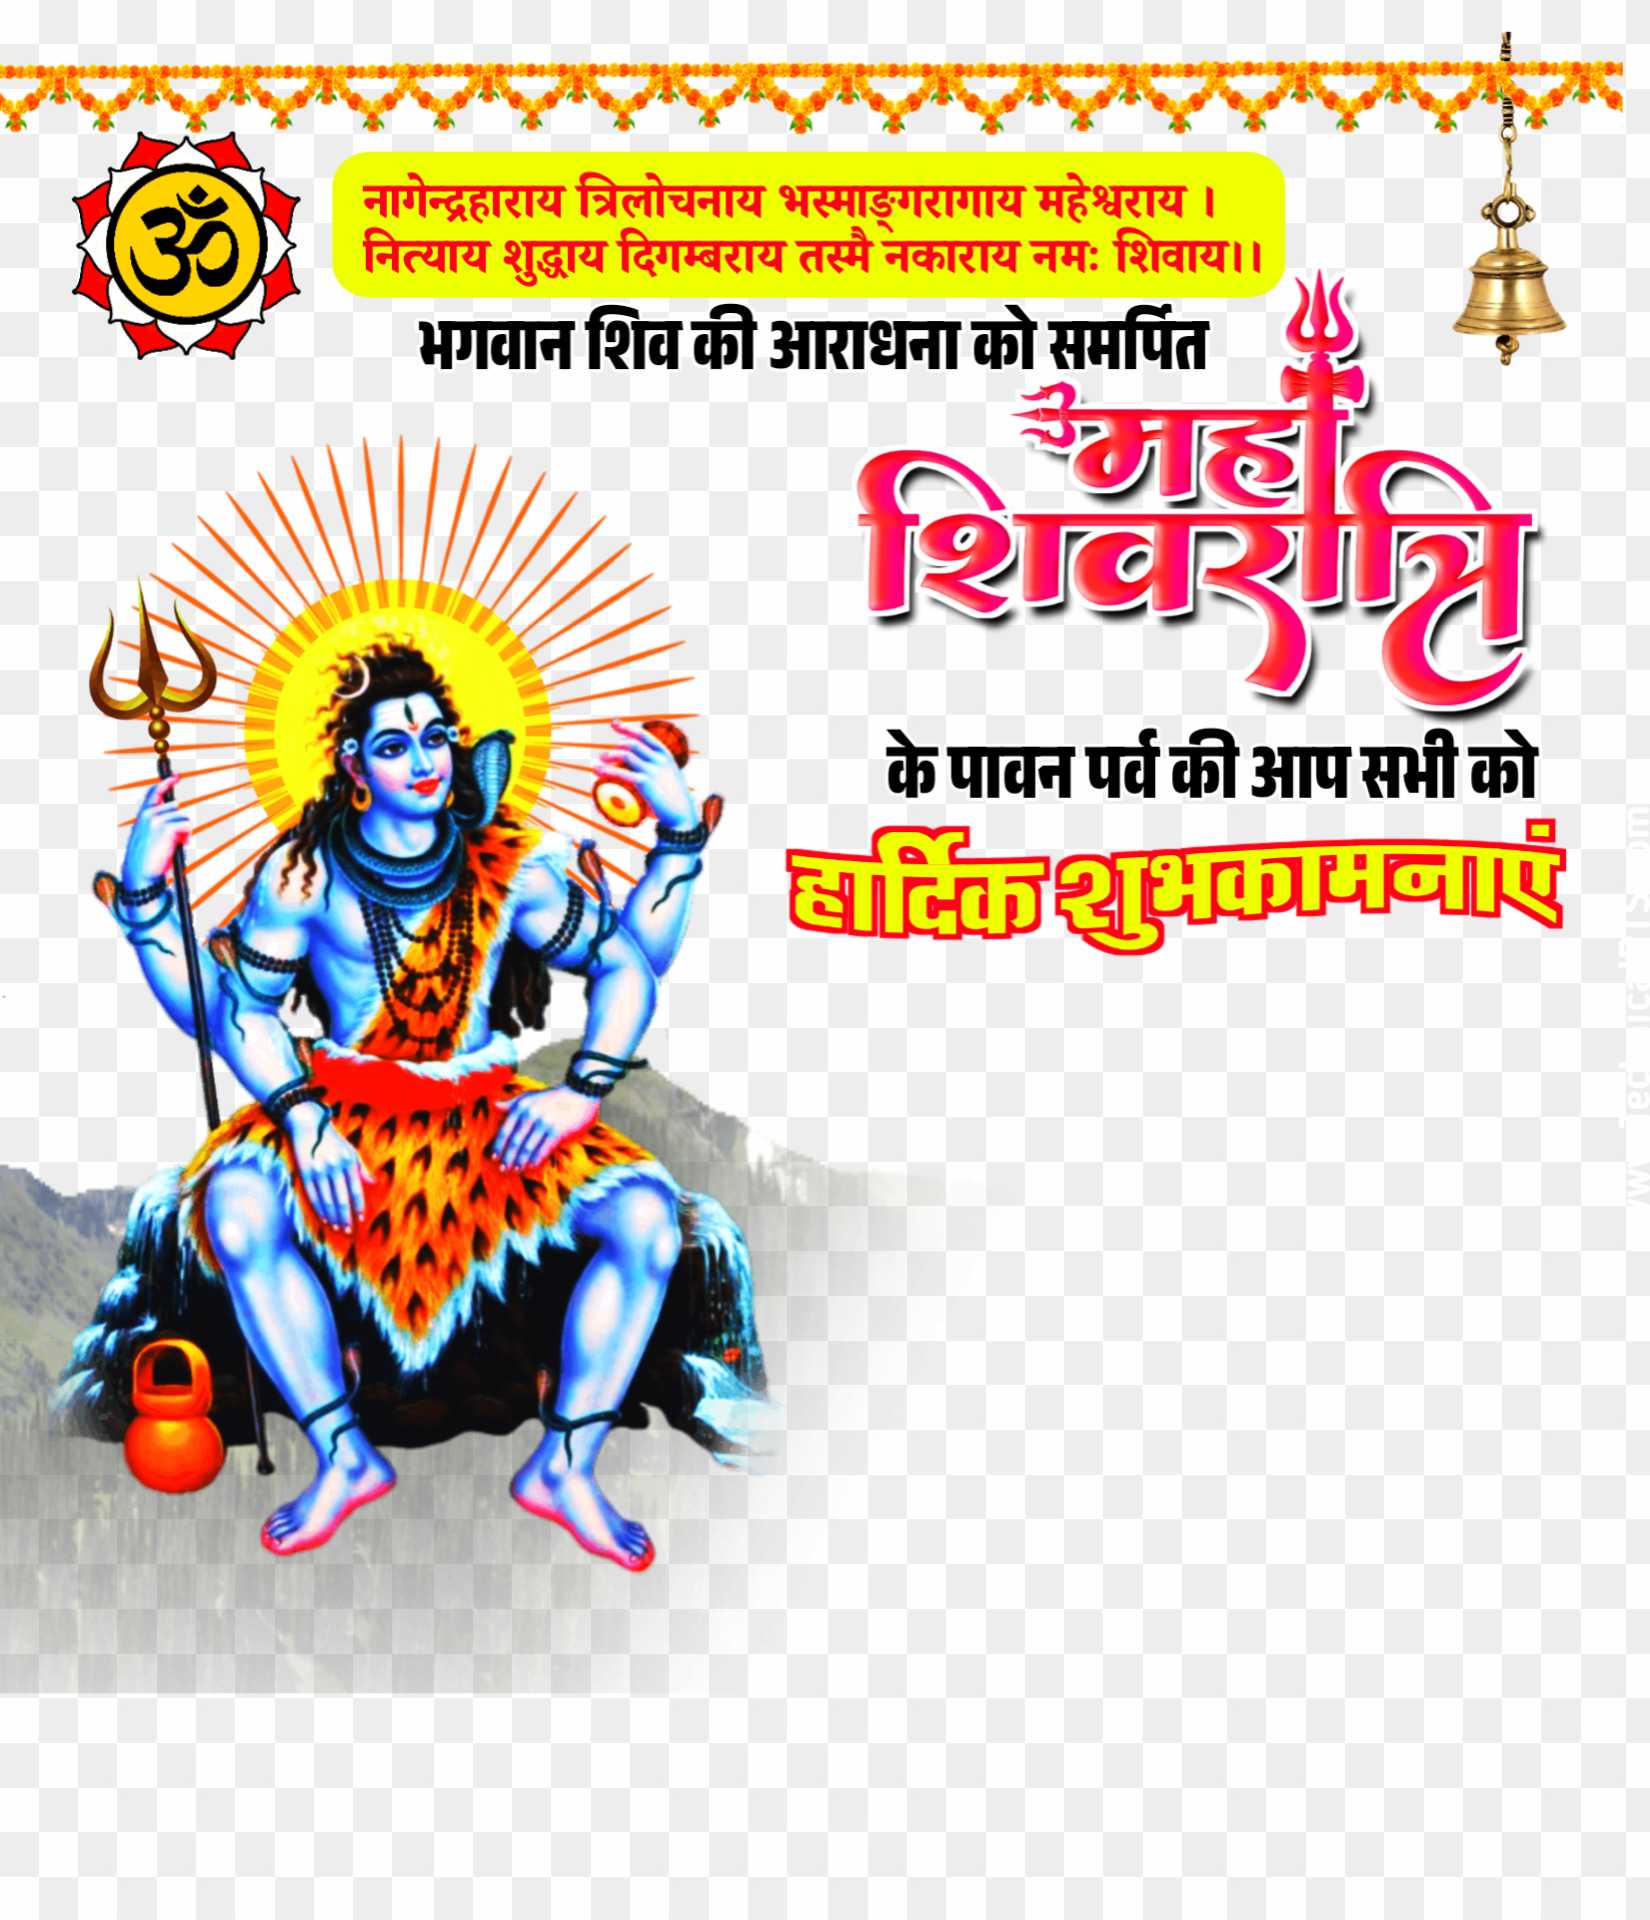 Mahashivratri banner PNG images